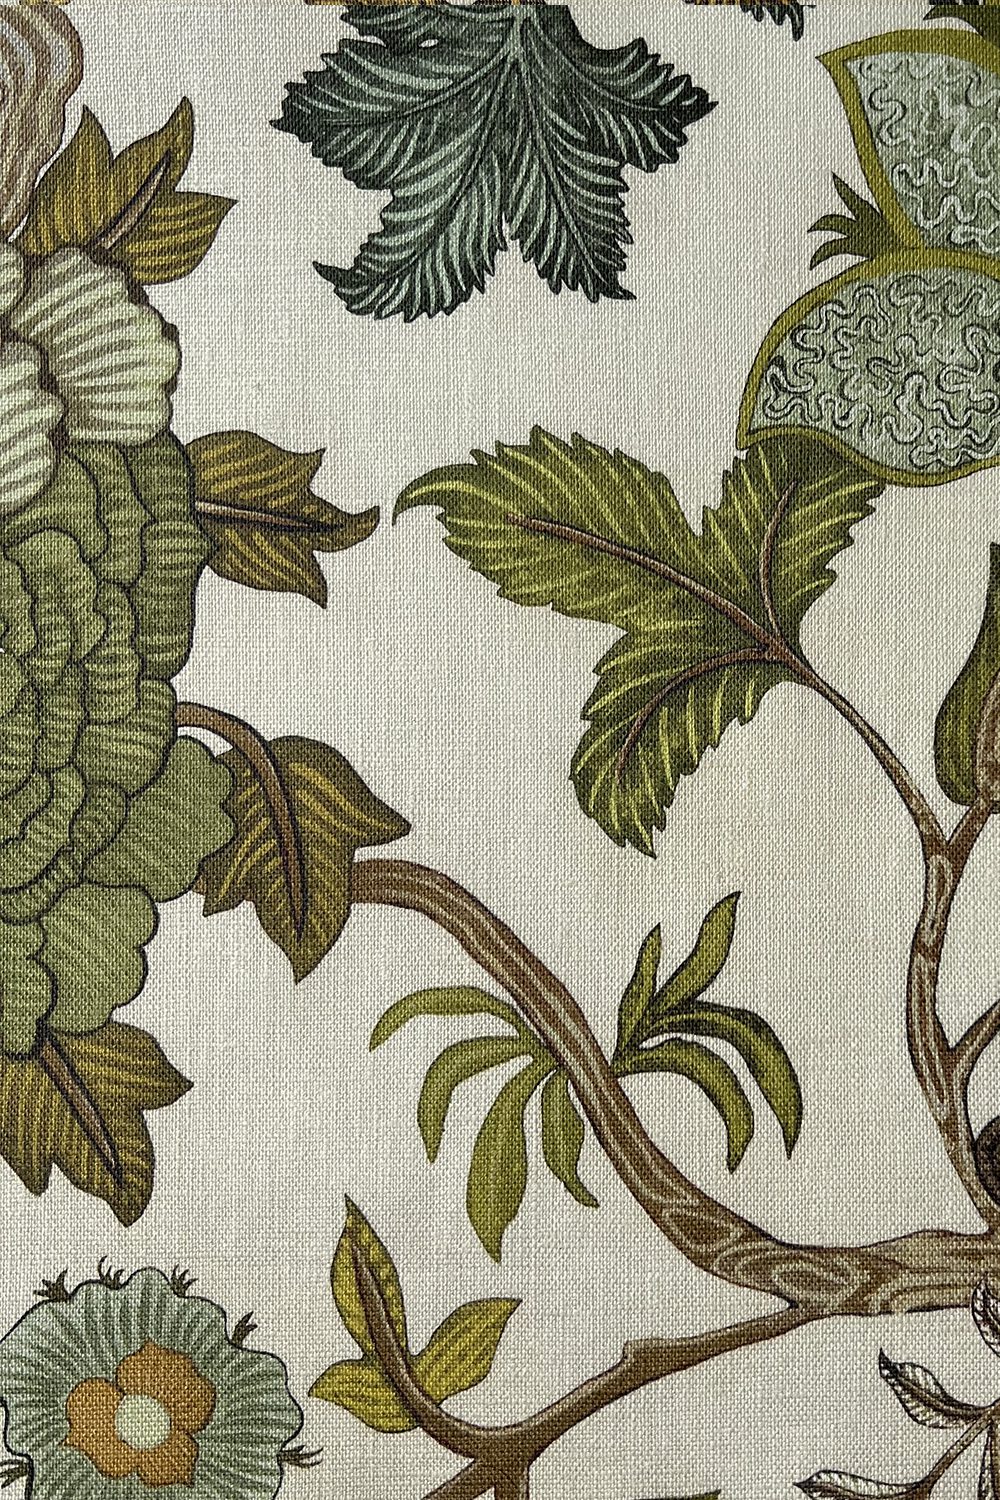 Josephine-Munsey-Chameleon-Trail-linen-fabric-textile-British-designer-floral-trail-botanical-print-chameleon-sage-and-green-blues-orange-cream-base -textile